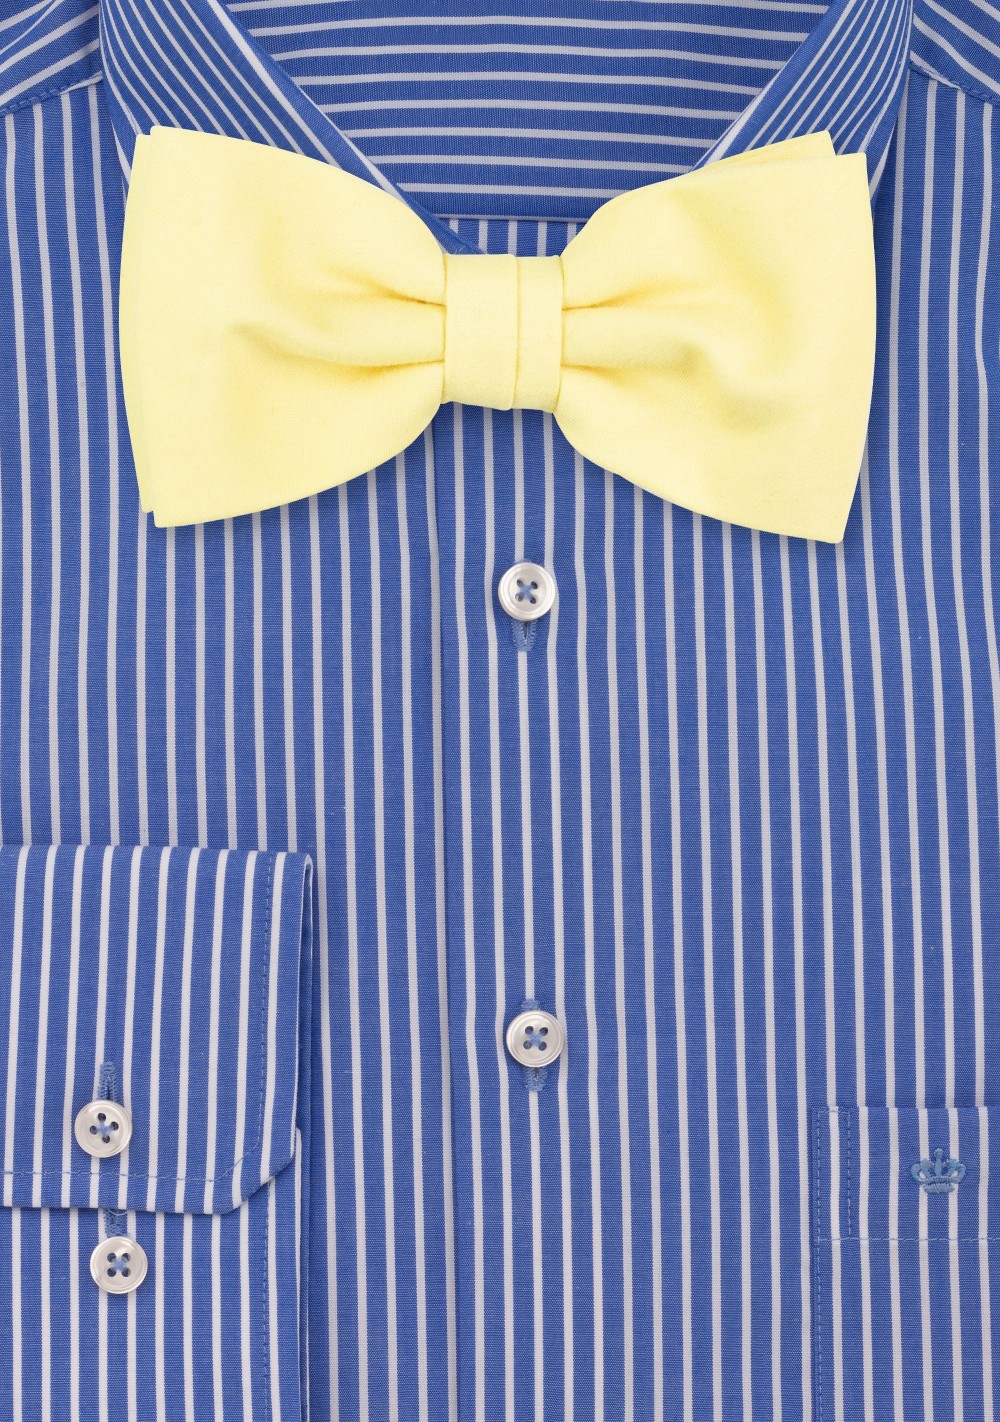 Lemon Chiffon Bow Tie by Puccini